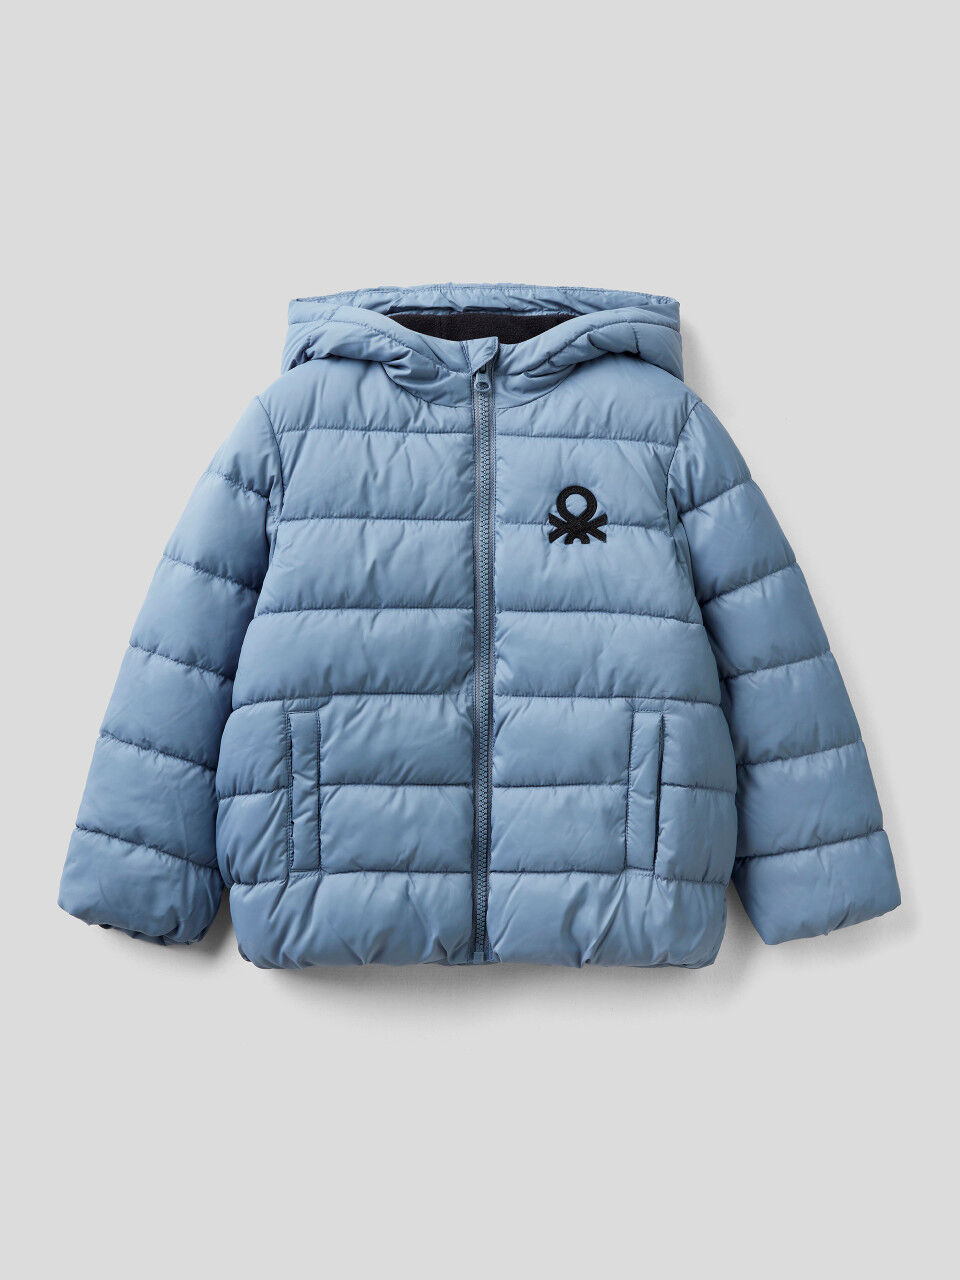 Benetton jacket Brown/White 3-6M discount 79% KIDS FASHION Jackets Print 